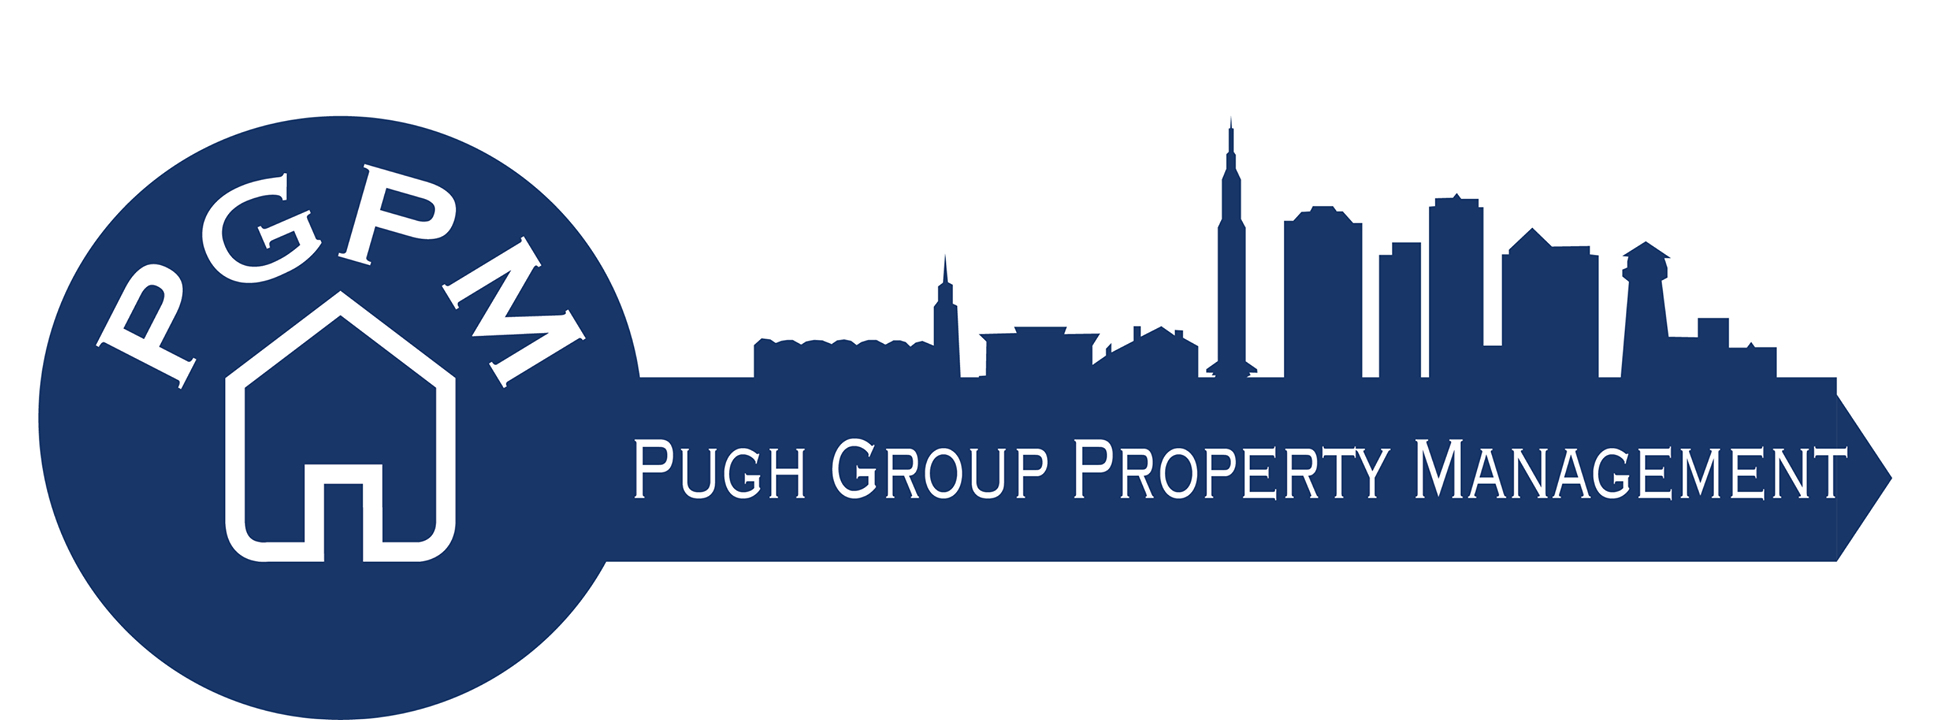 4029+ Pugh group property management info